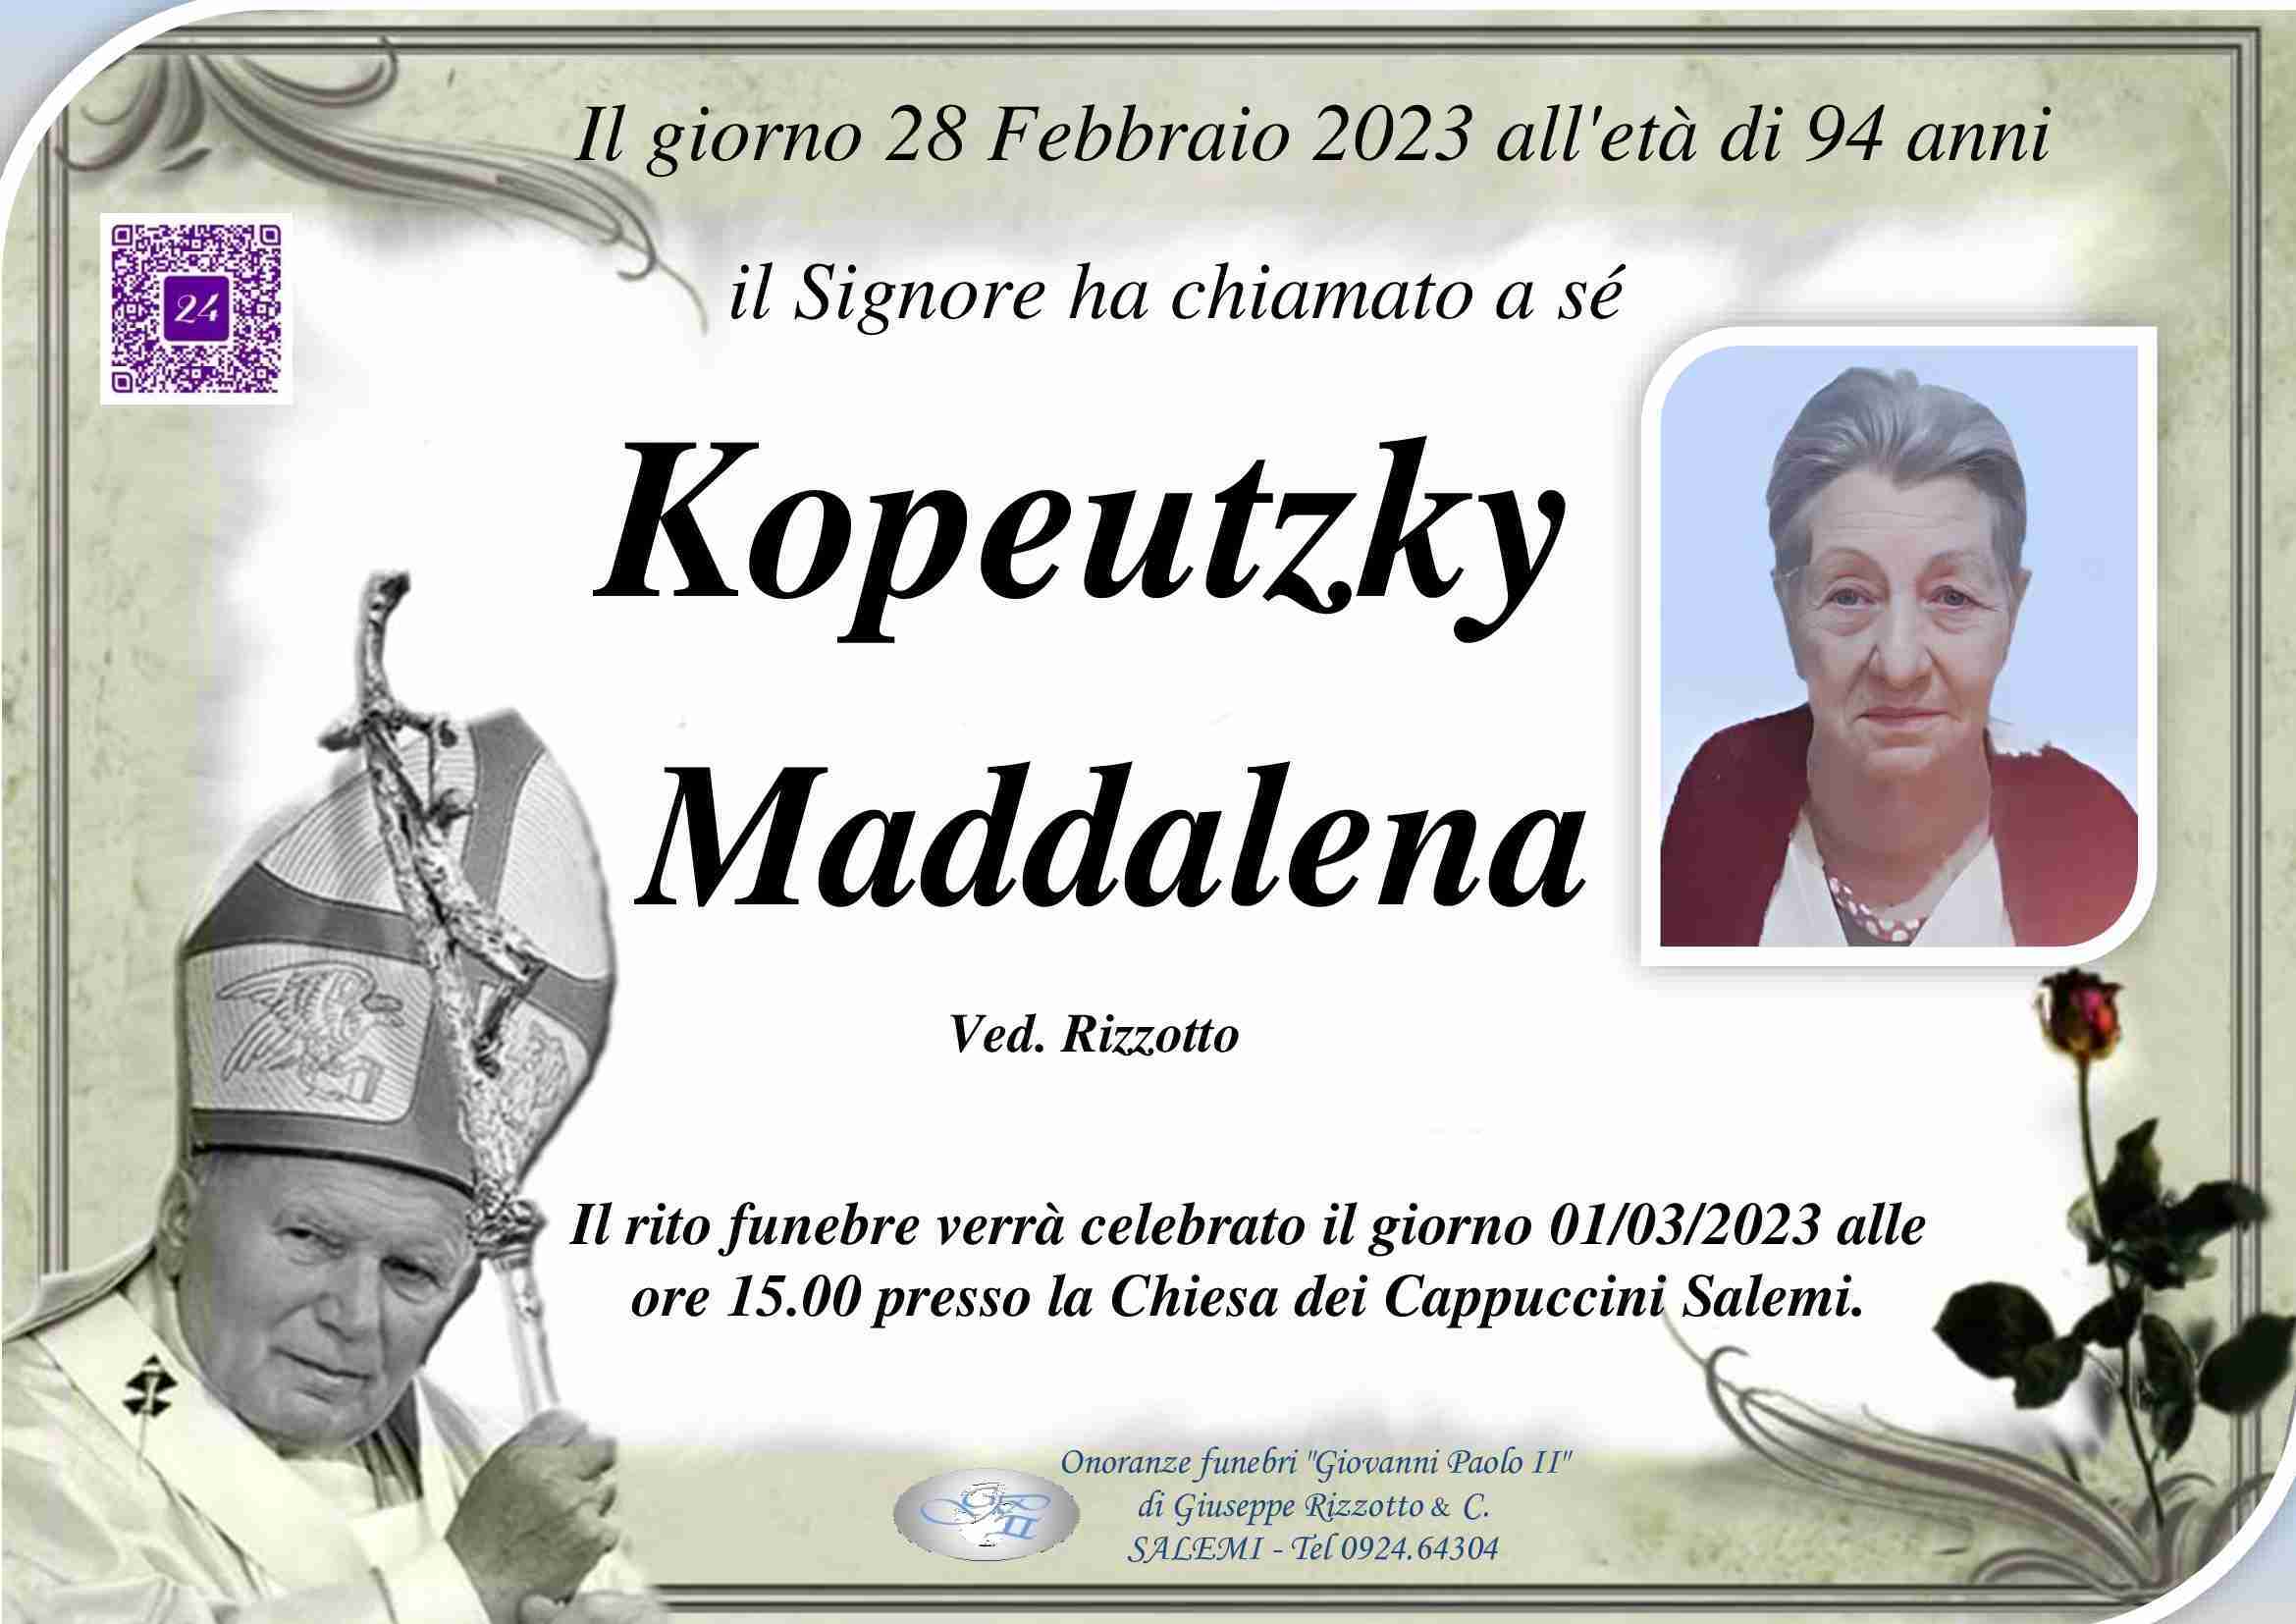 Maddalena Kopeutzky